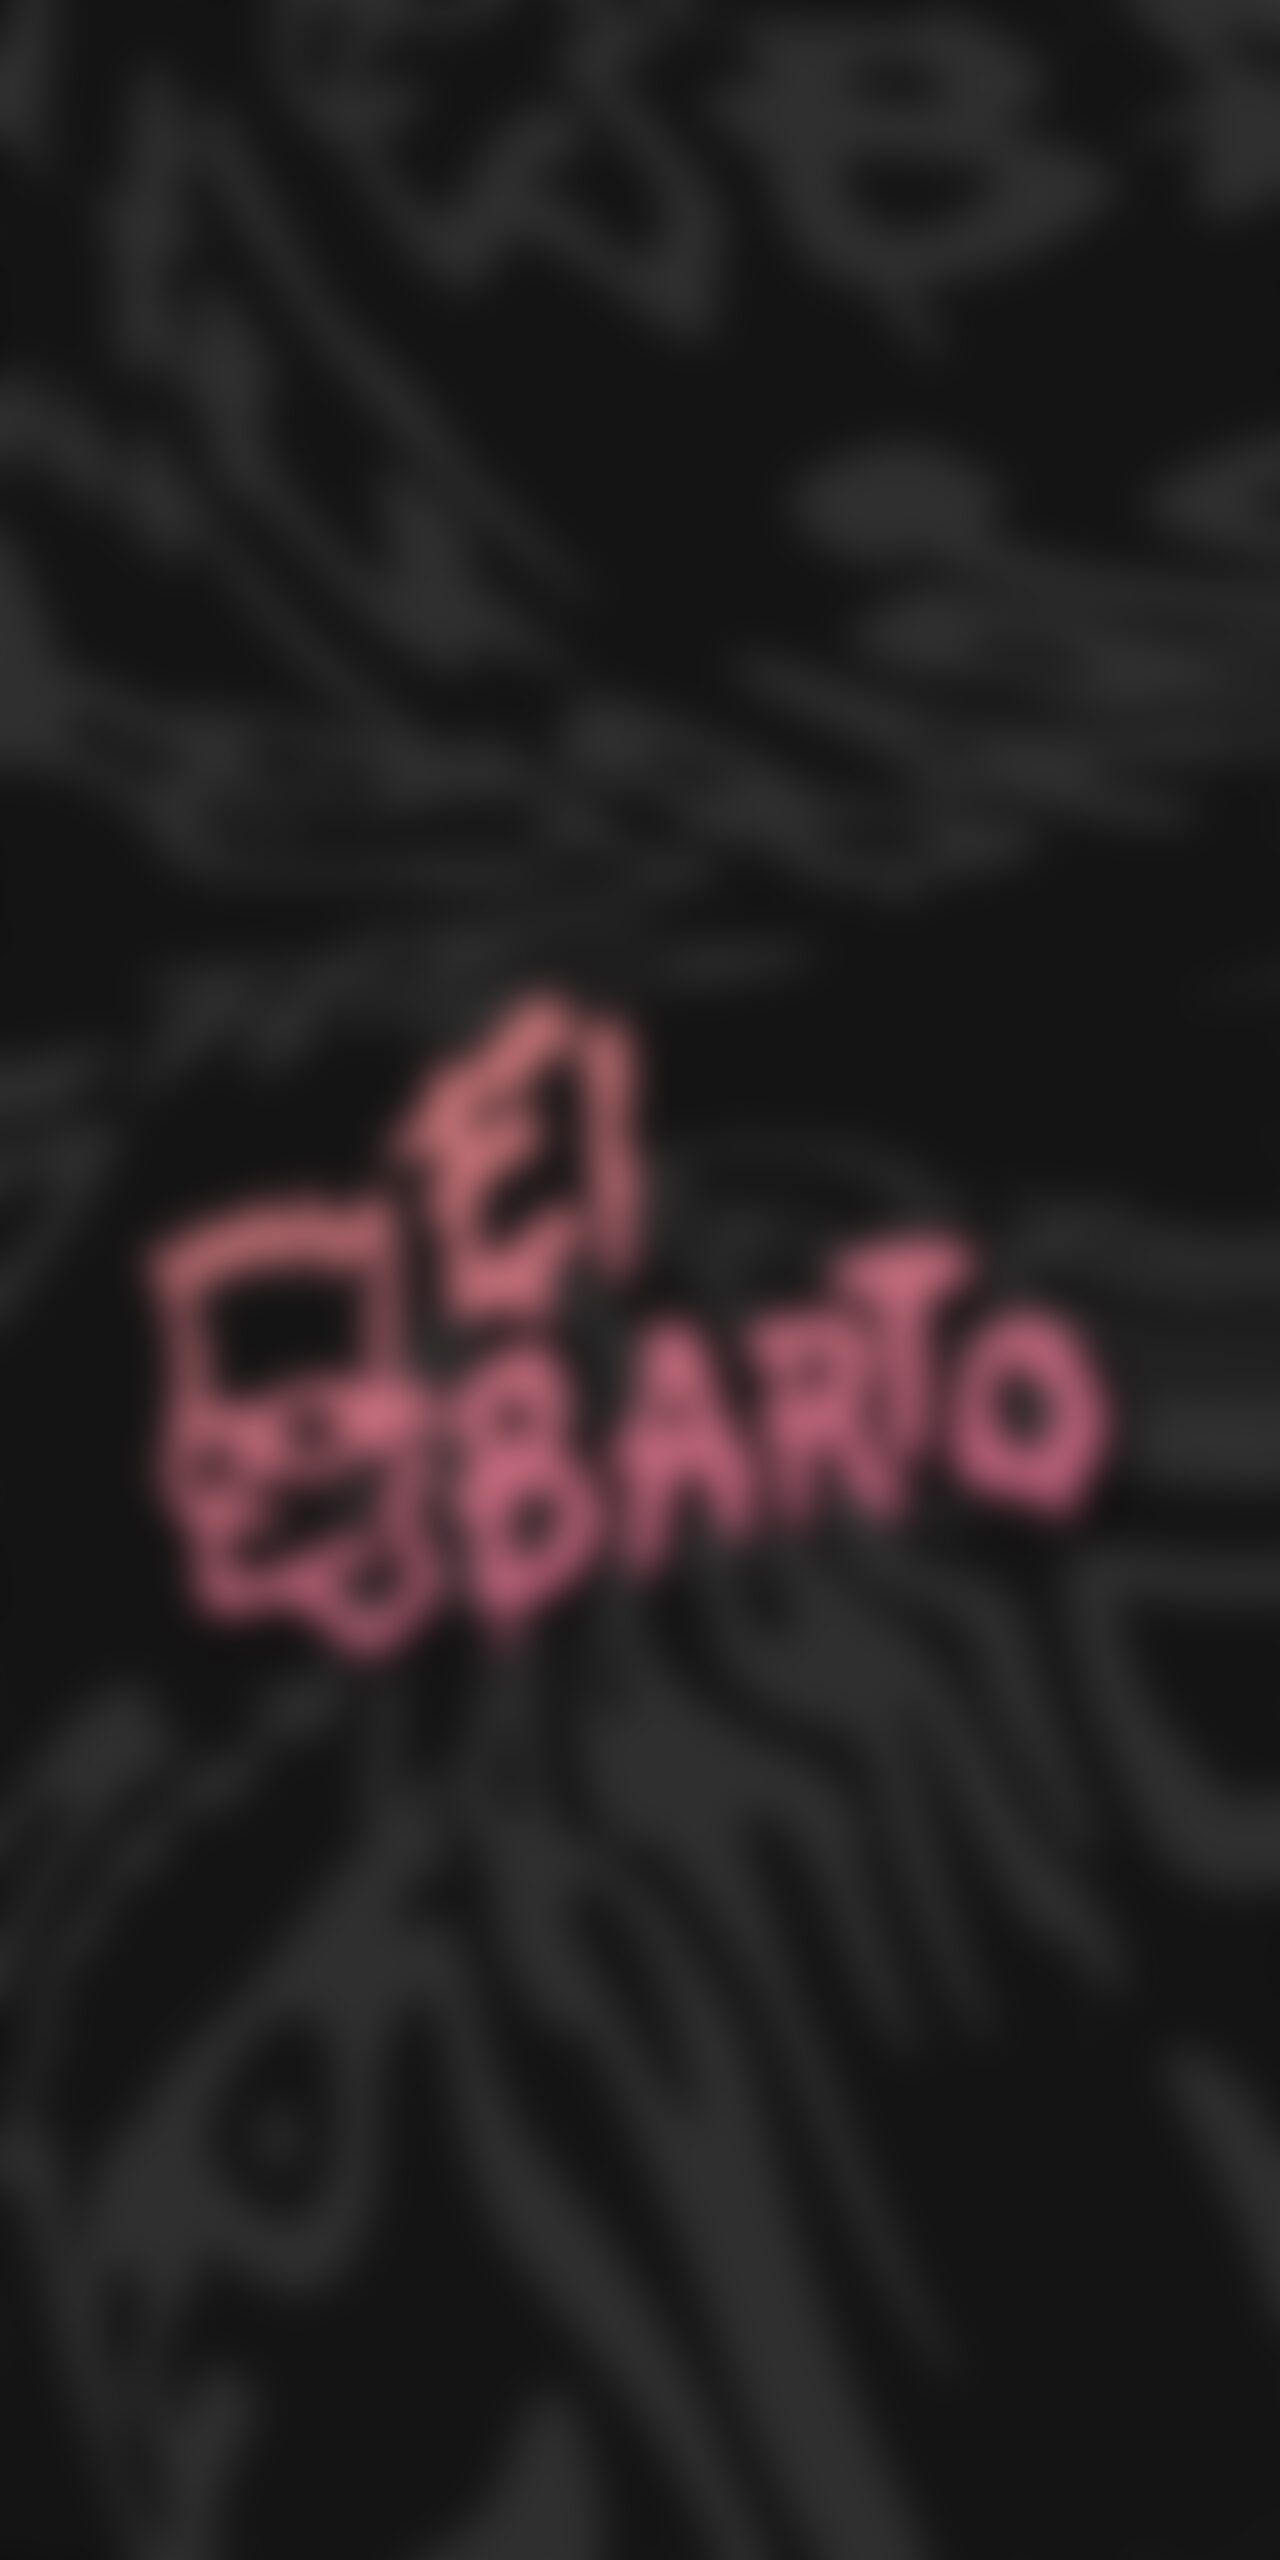 Black Background with Bart Simpson's Tag Wallpaper El Barto